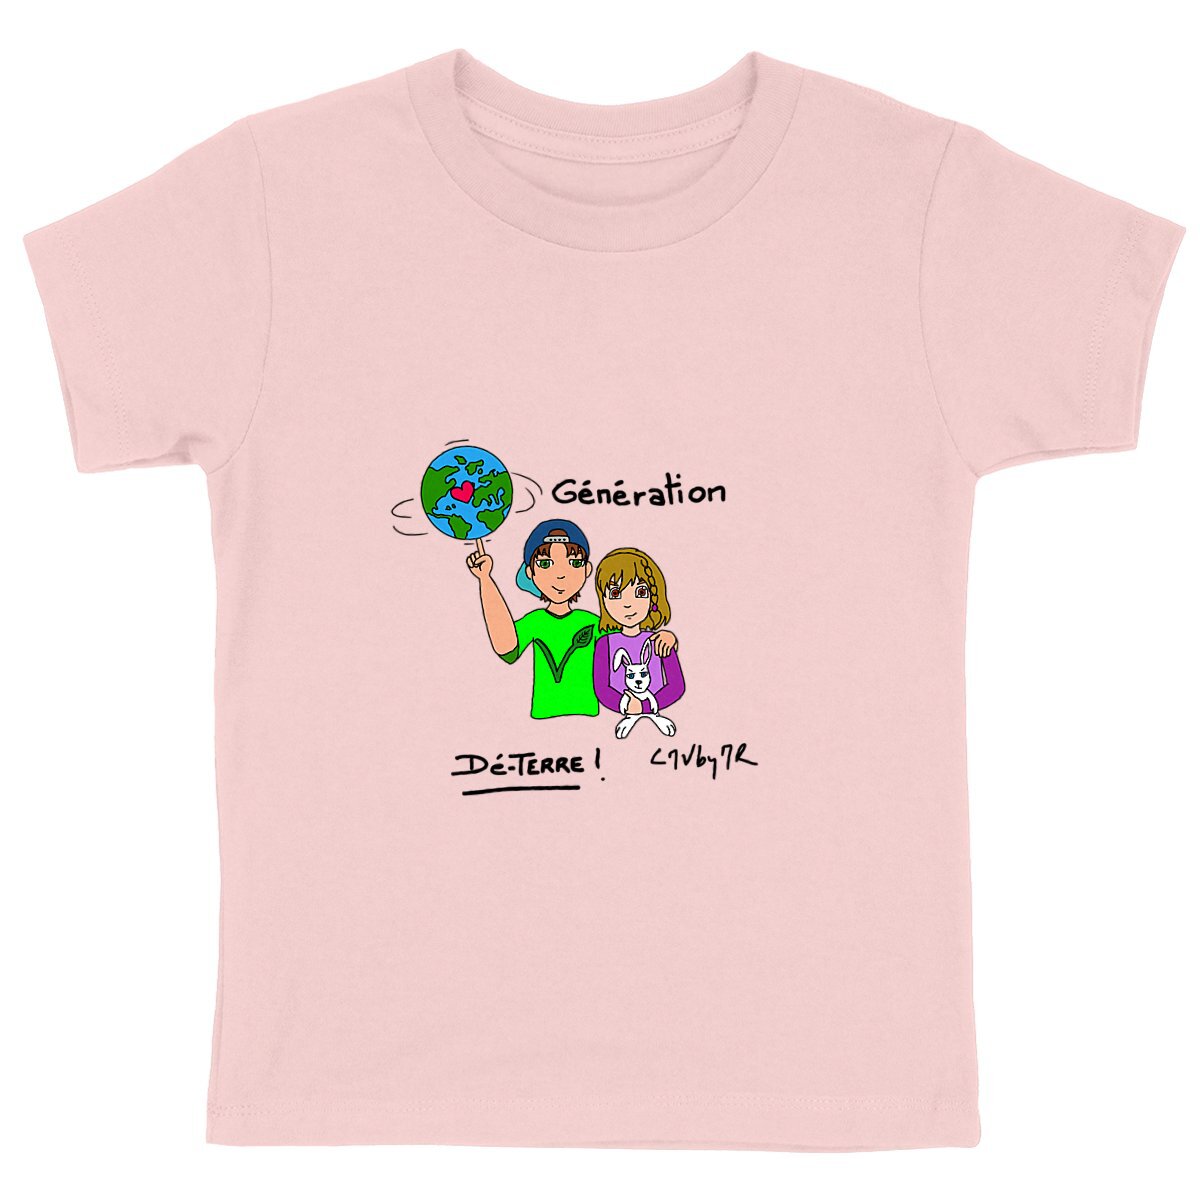 Tee-shirt Enfant LMV GENERATION DE-TERRE !